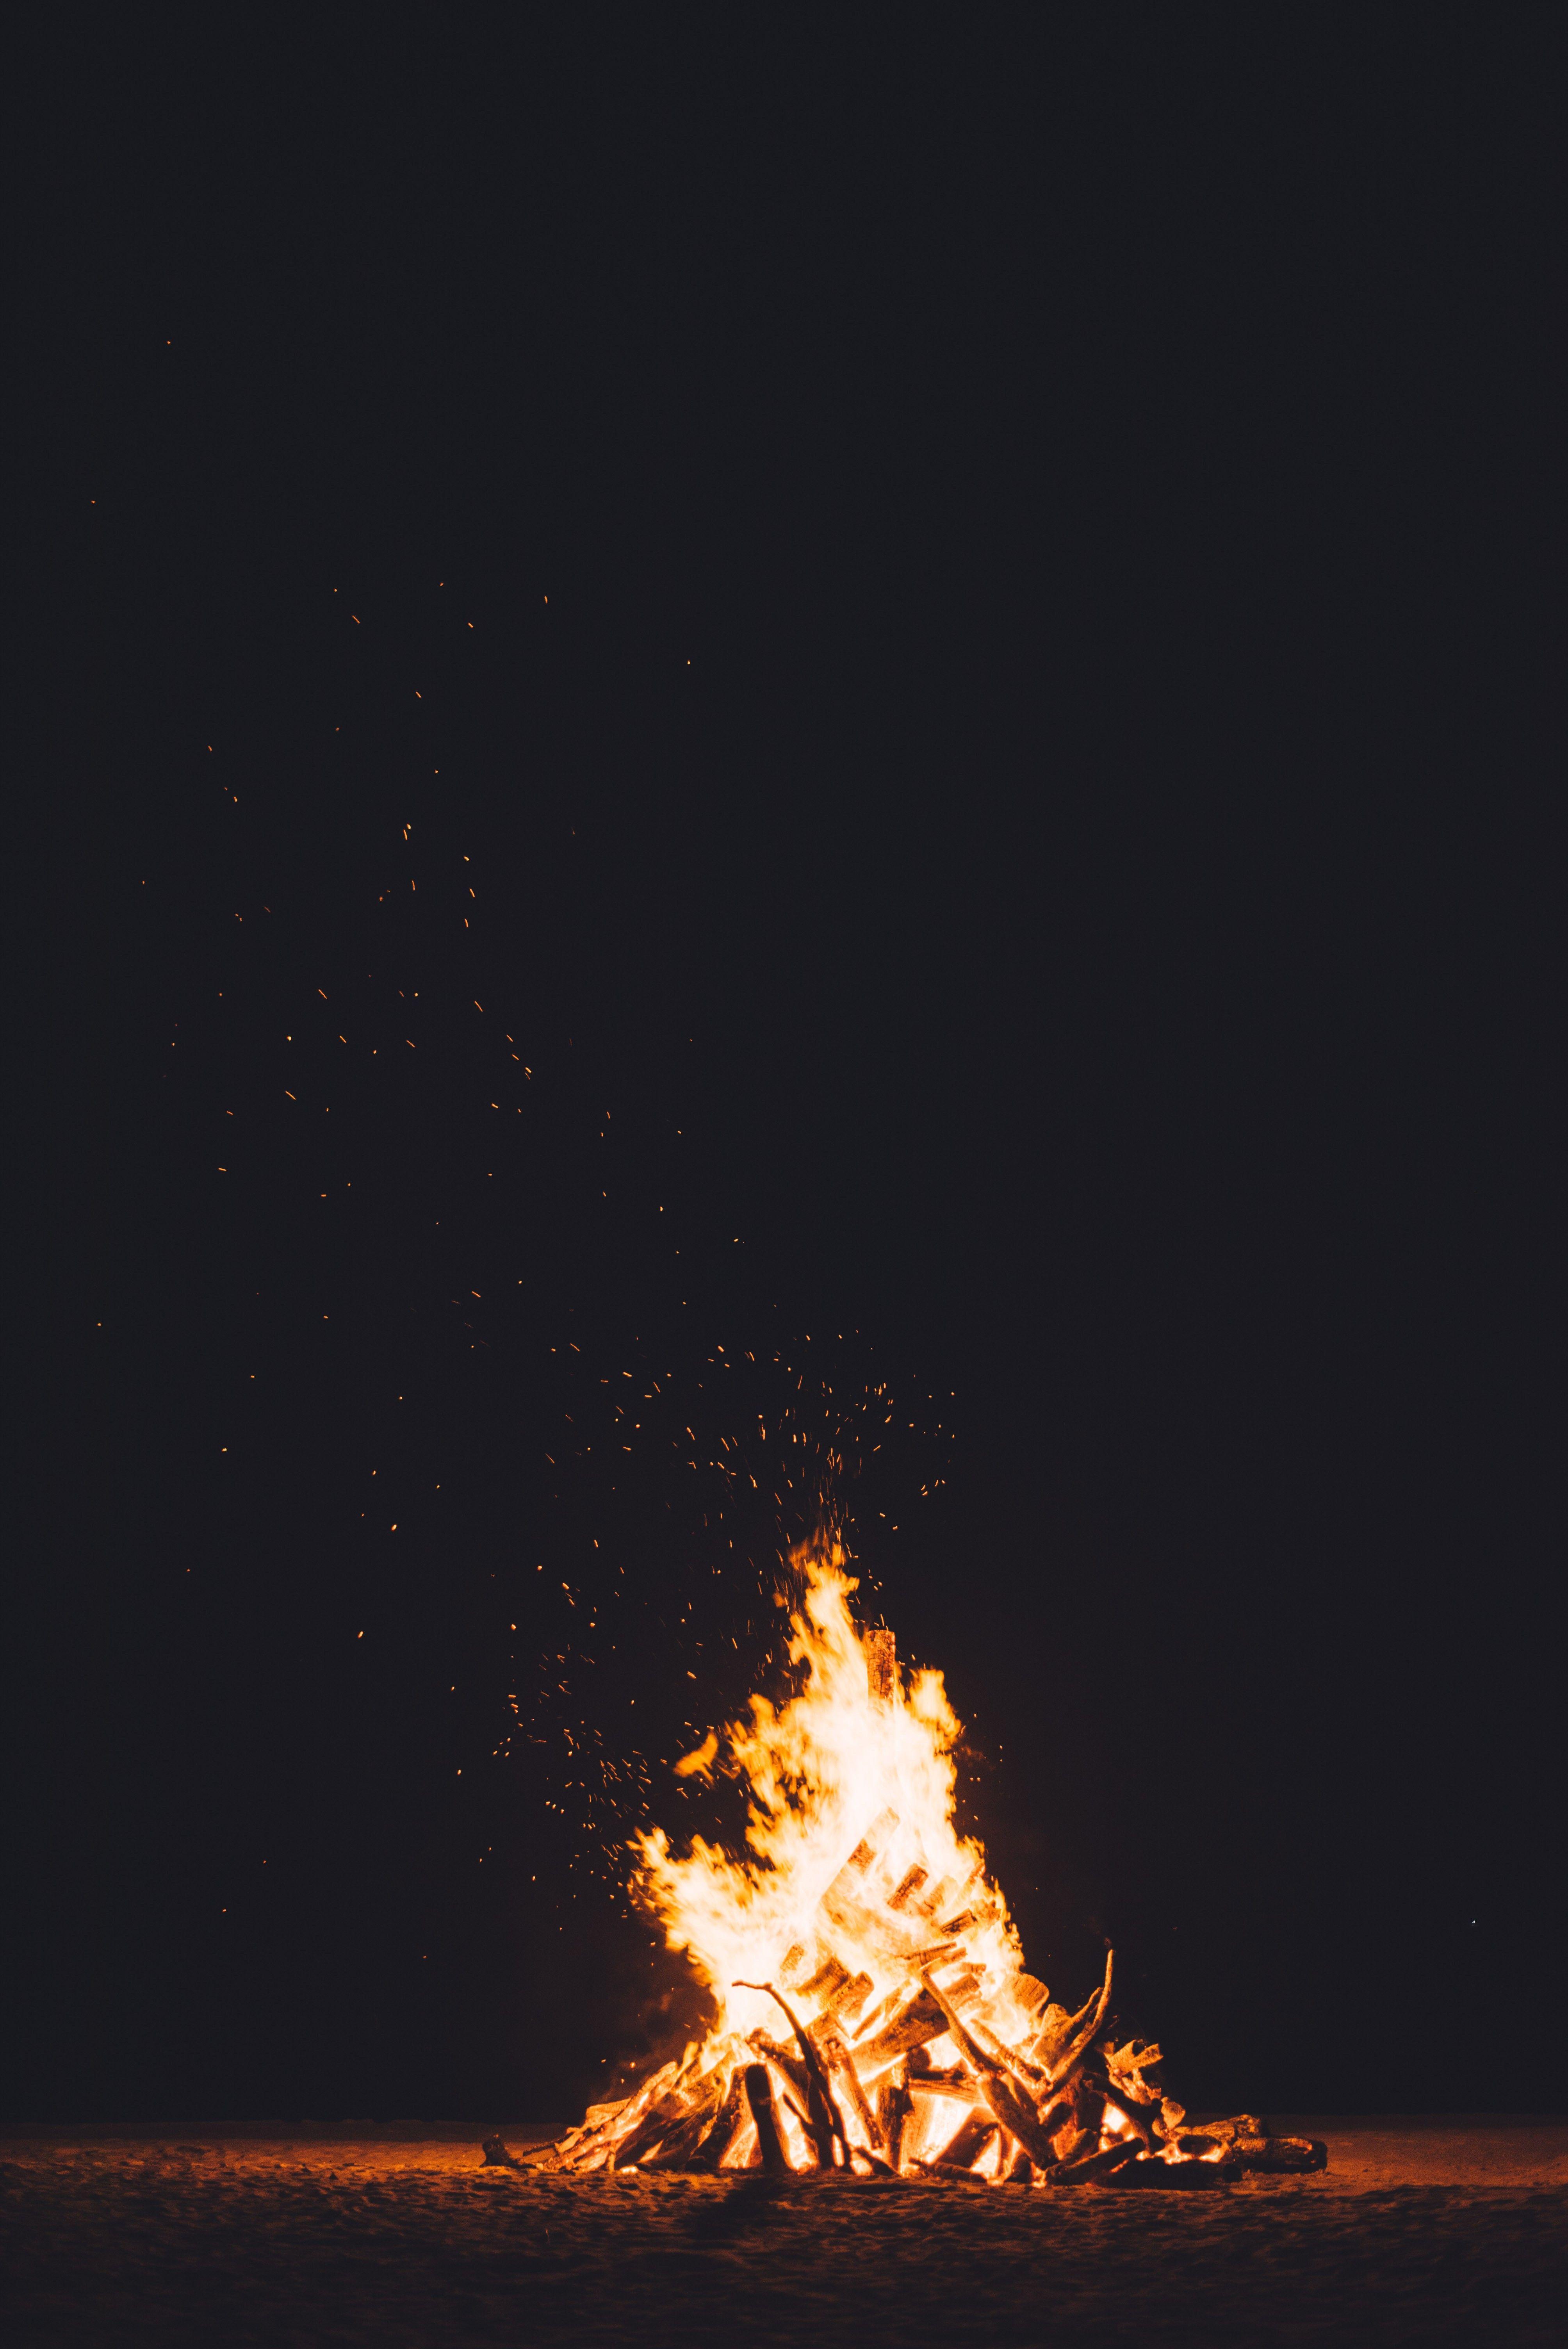 Wallpaper, night, nature, fire, campfire, flame, darkness